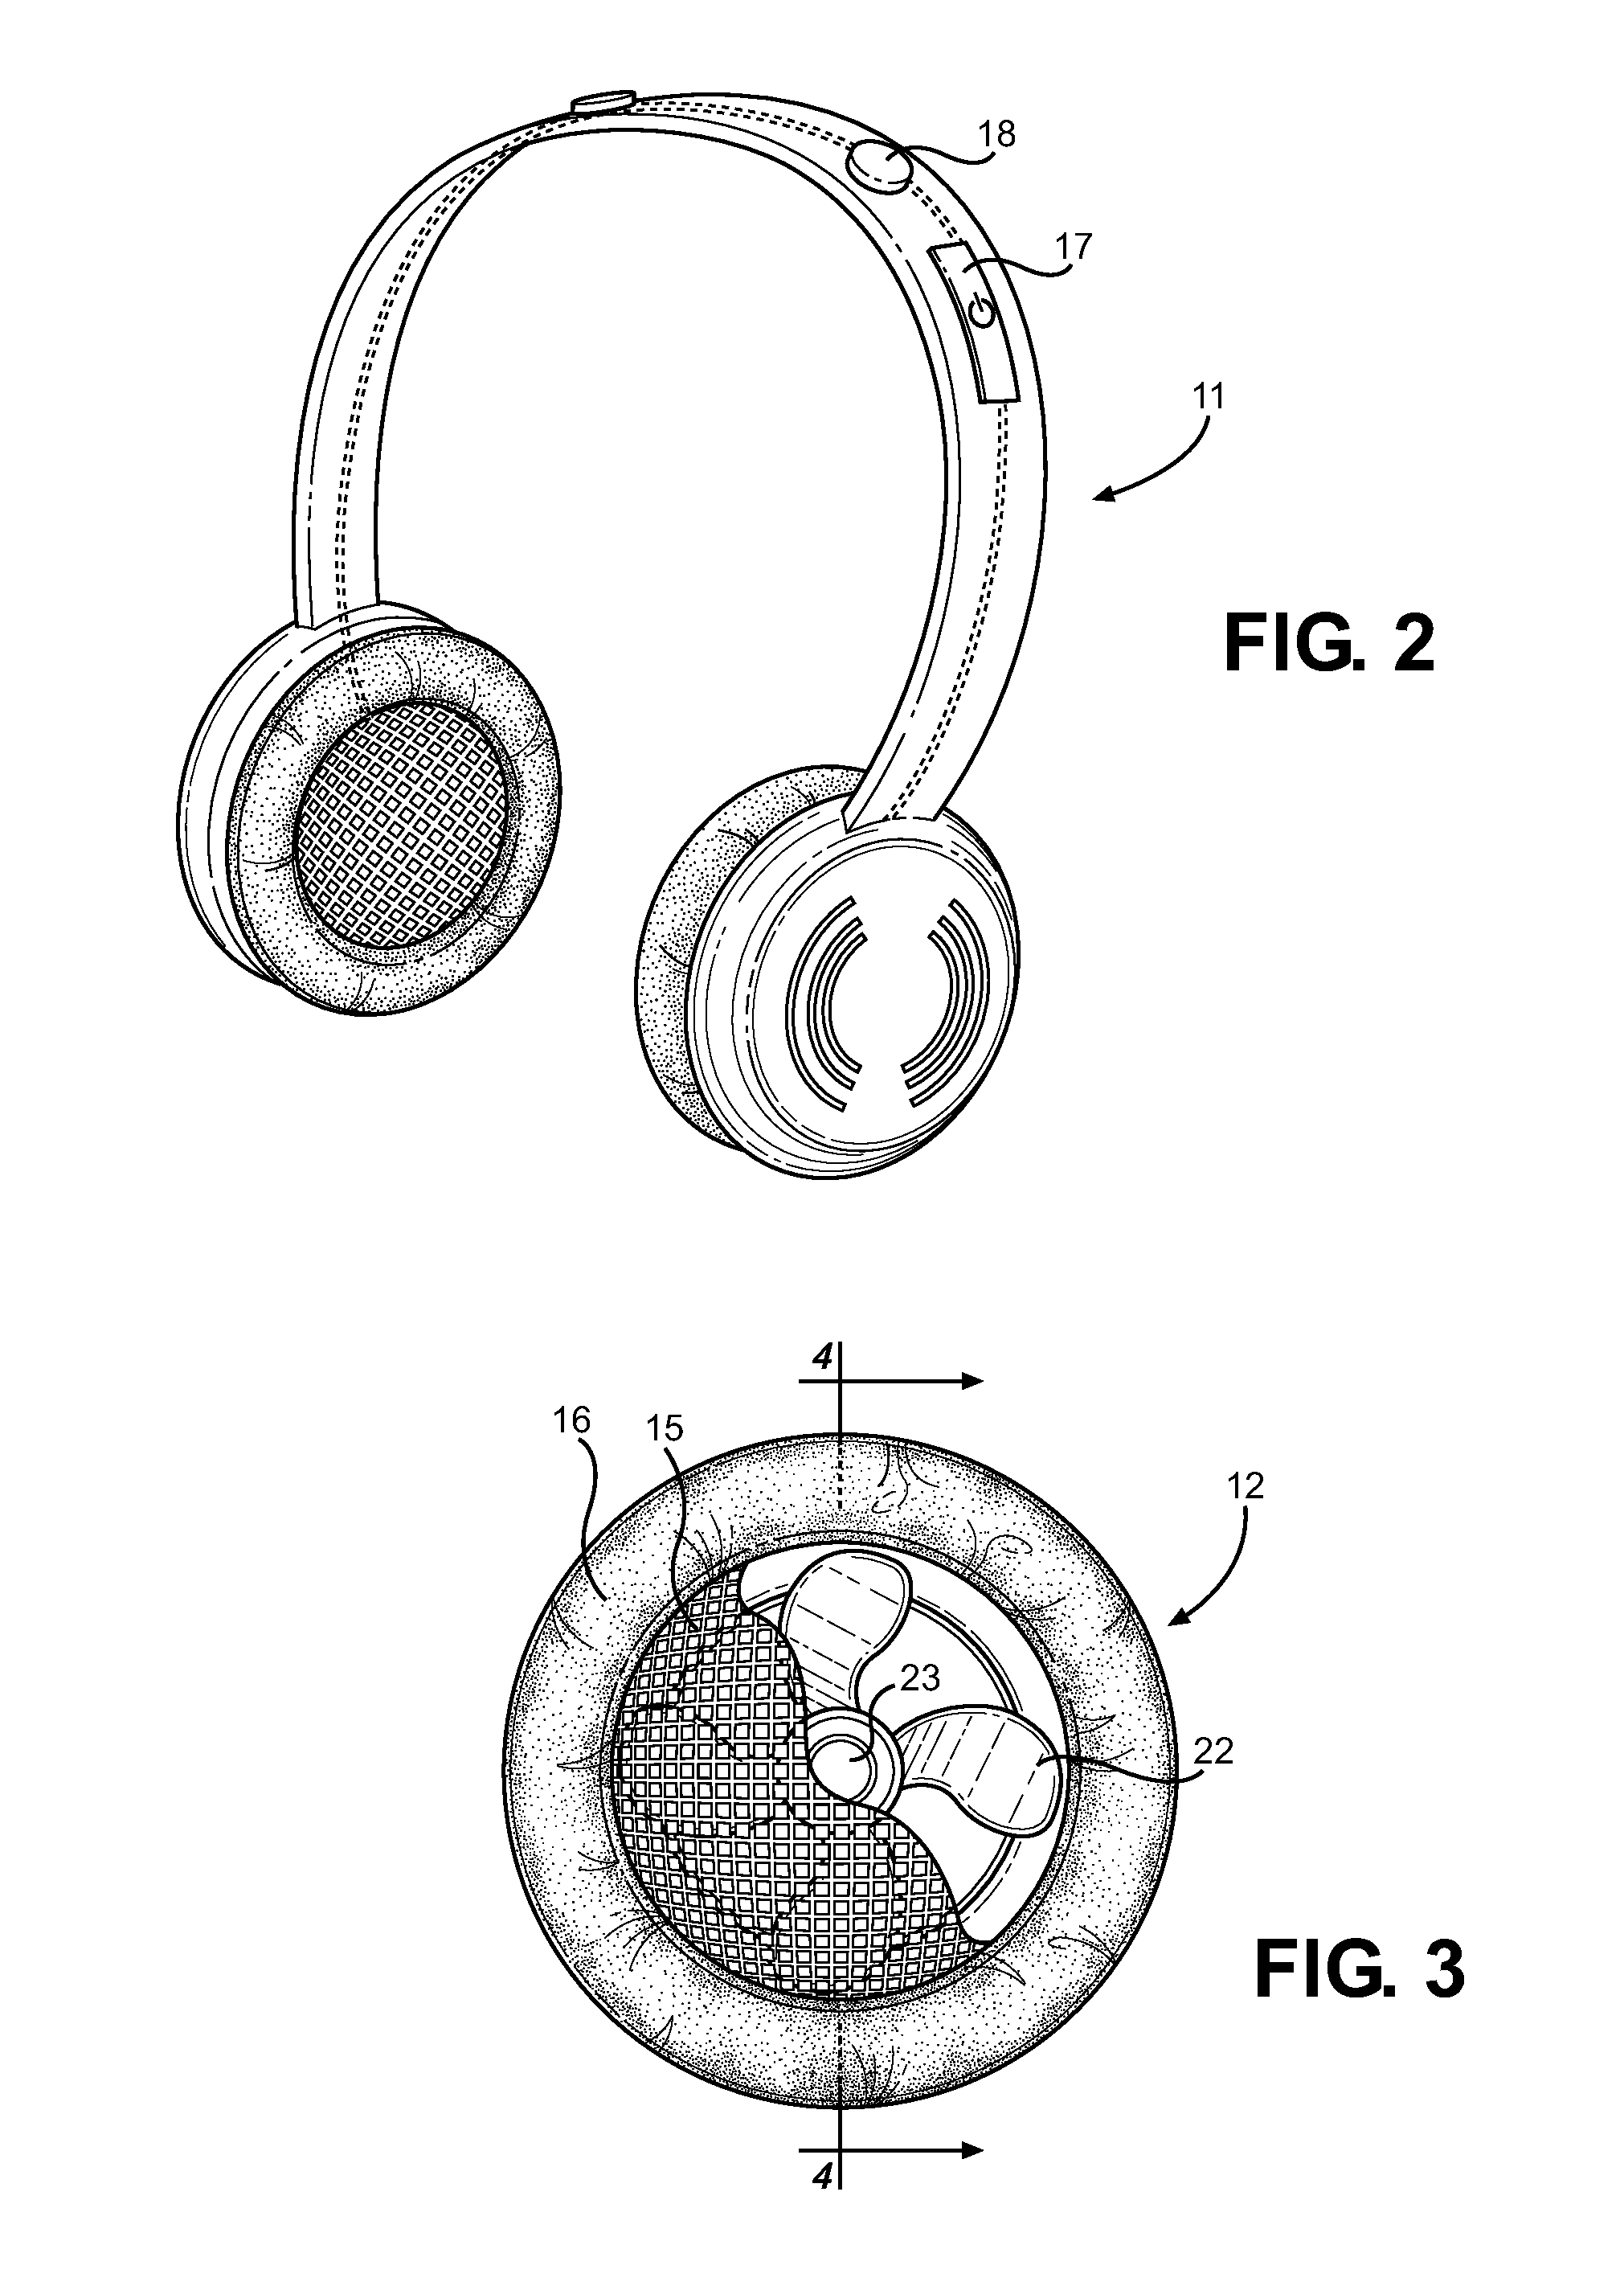 Portable pressurization headphones